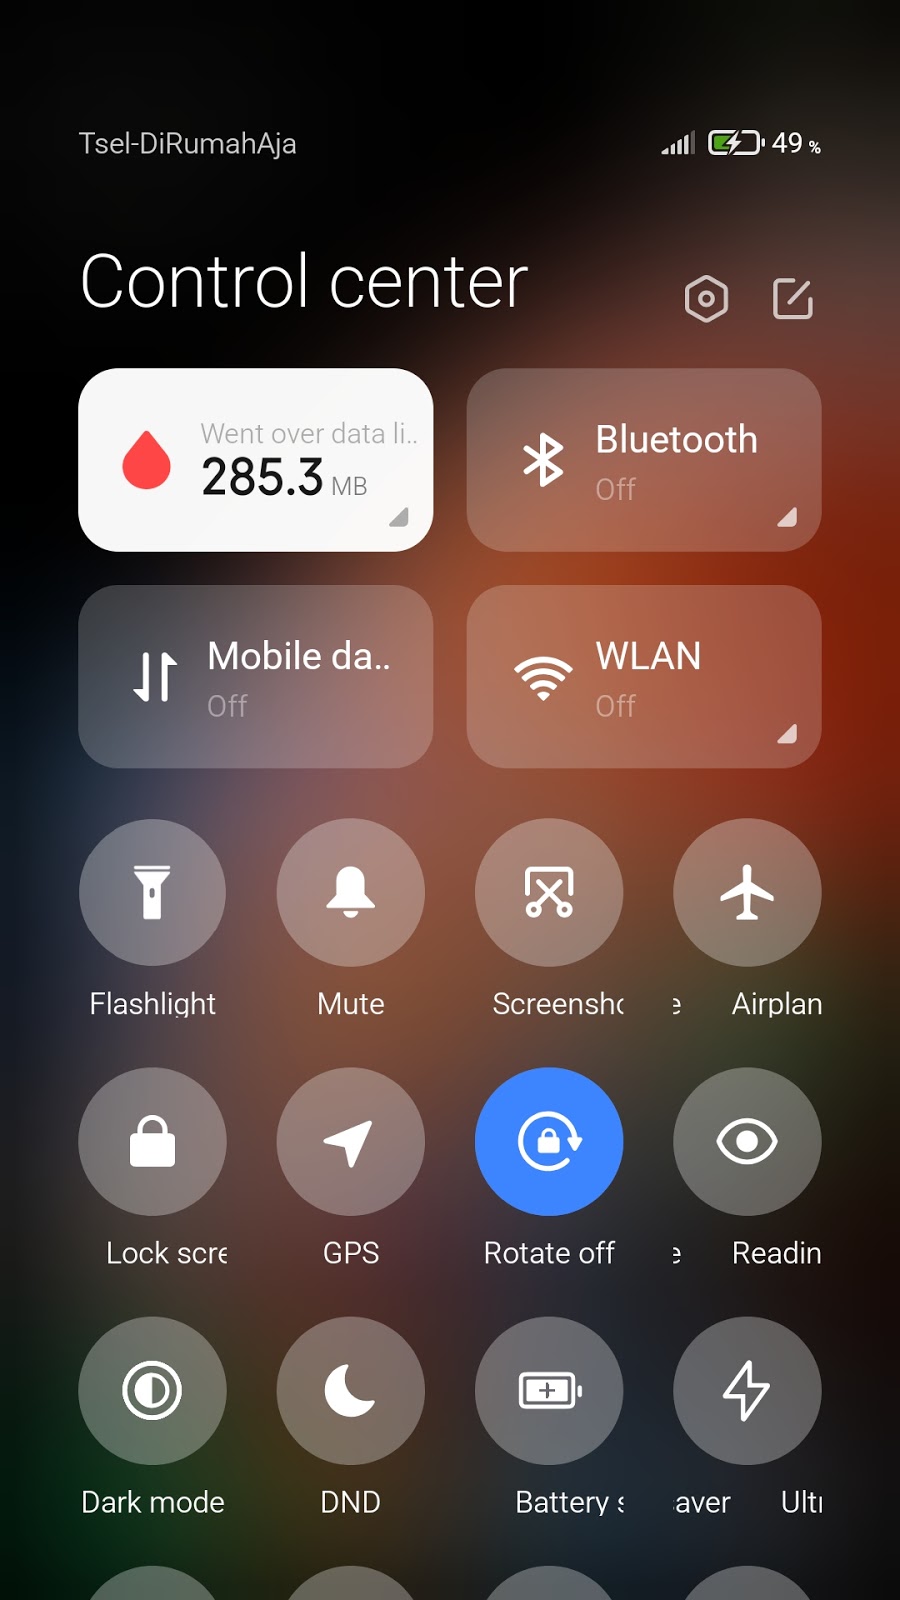 Xiaomi Eu 12.5 1.0